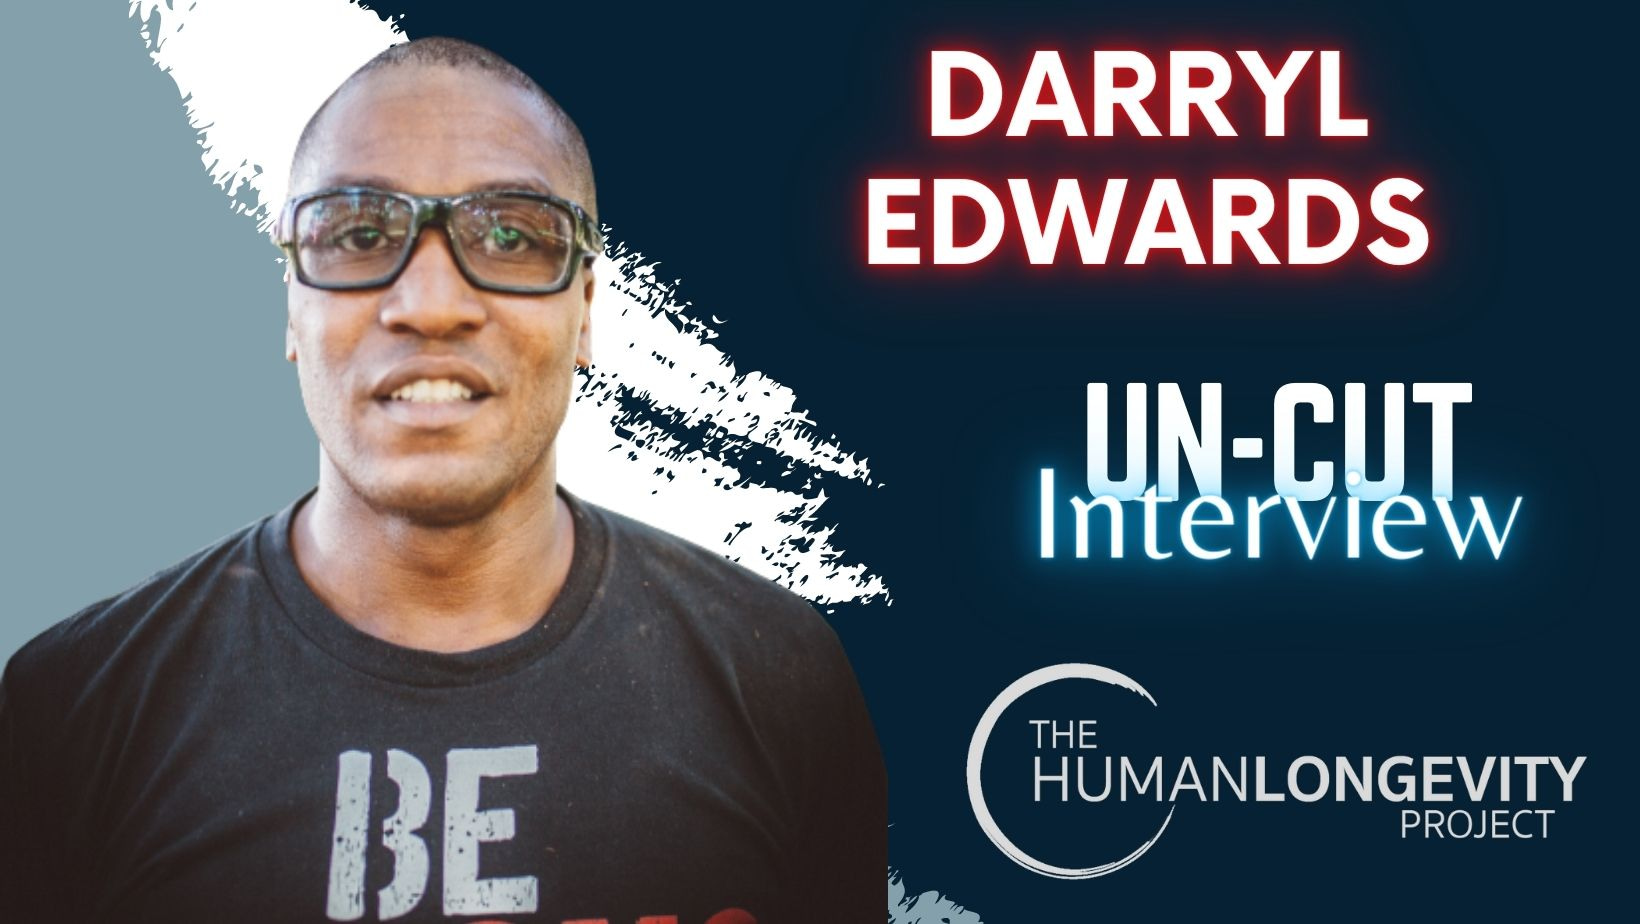 Human Longevity Project Uncut Interview With Darryl Edwards